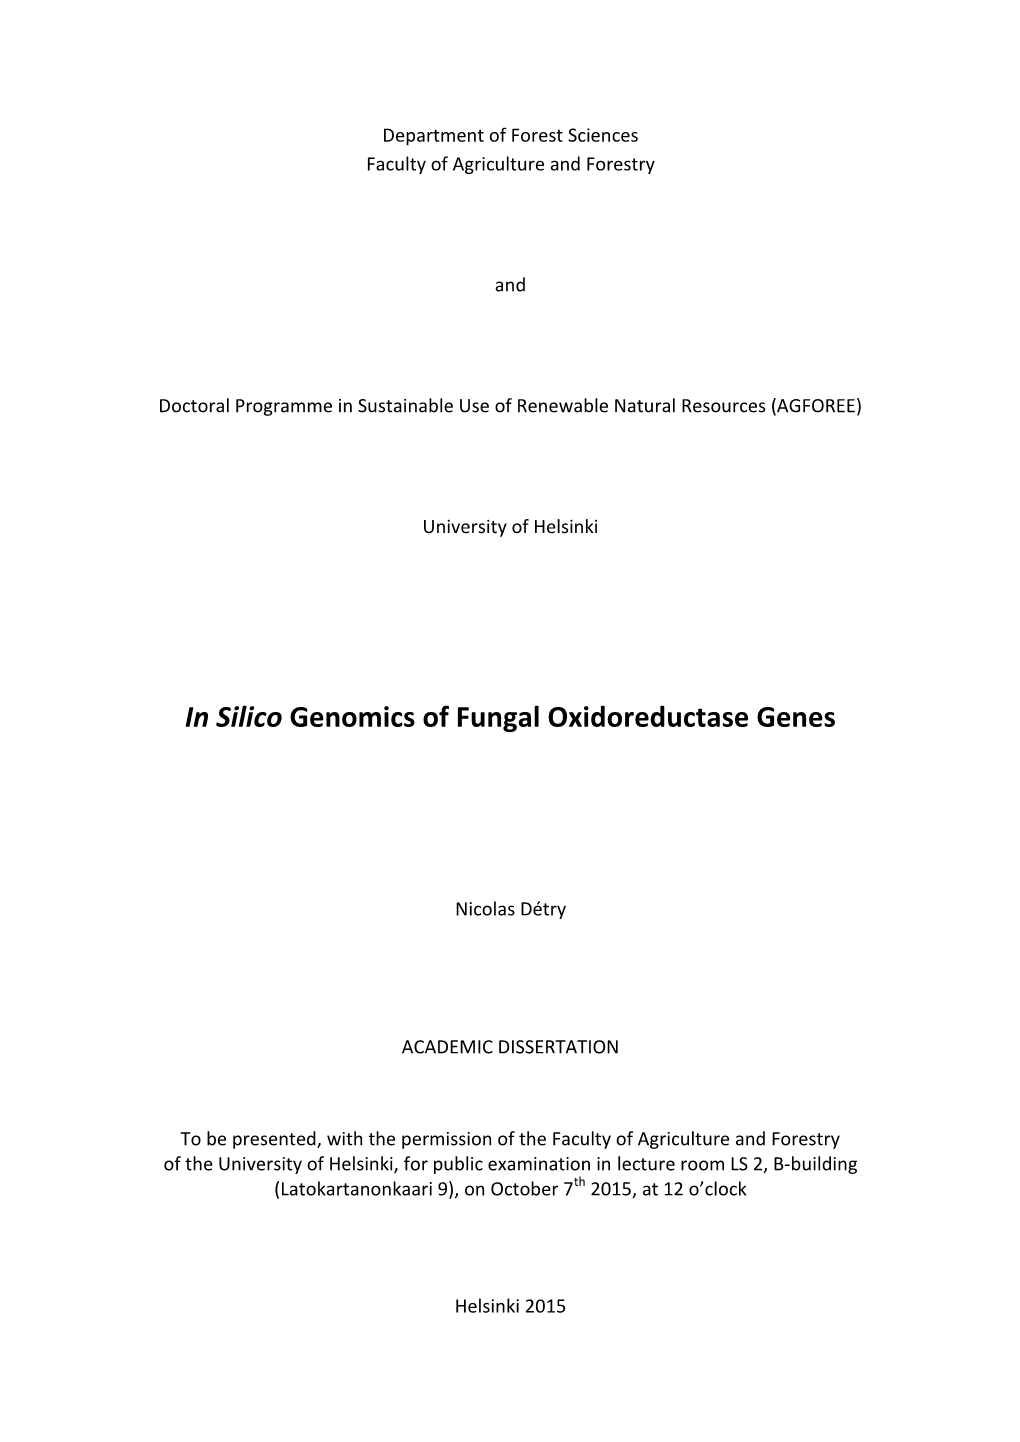 In Silico Genomics of Fungal Oxidoreductase Genes